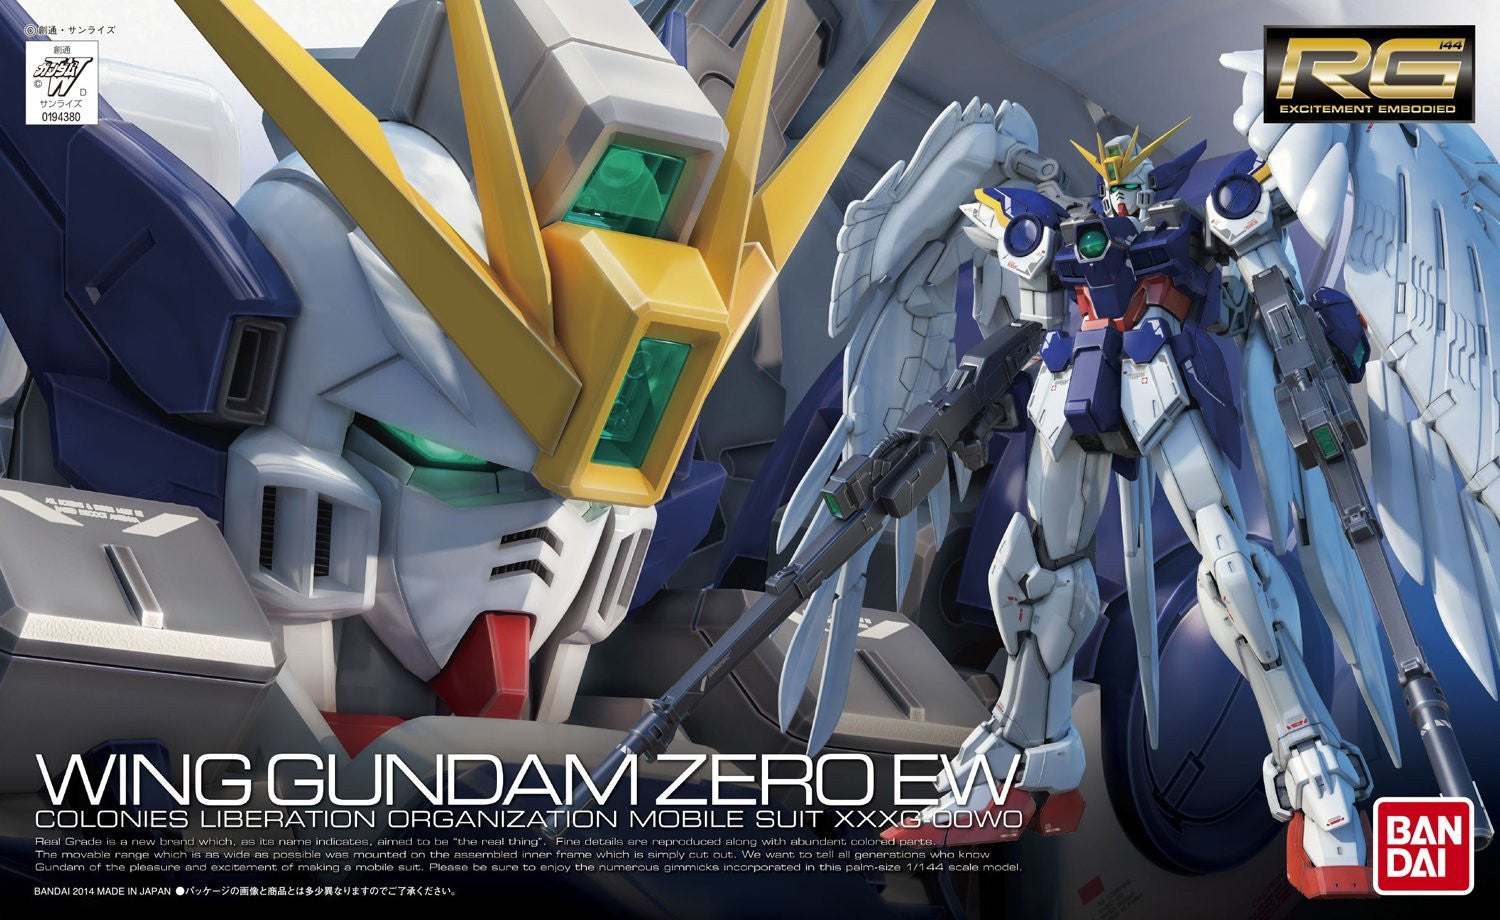 17 RG Wing Gundam Zero EW